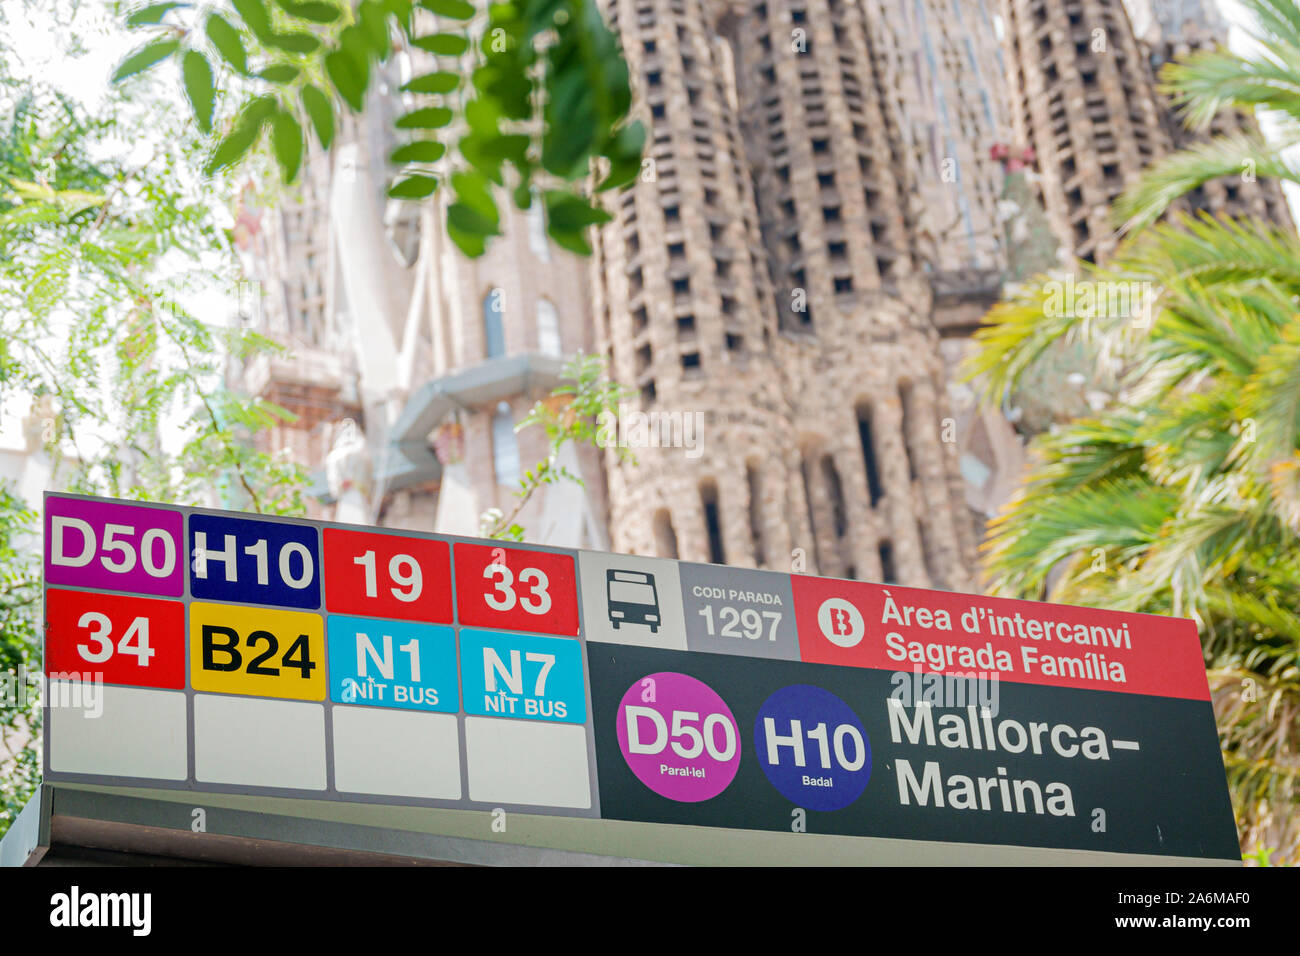 Barcelona Spain,Catalonia Sagrada Familia,Mallorca Marina bus stop,shelter,Transports Metropolitans de Barcelona,TMB,routes,ES190902045 Stock Photo